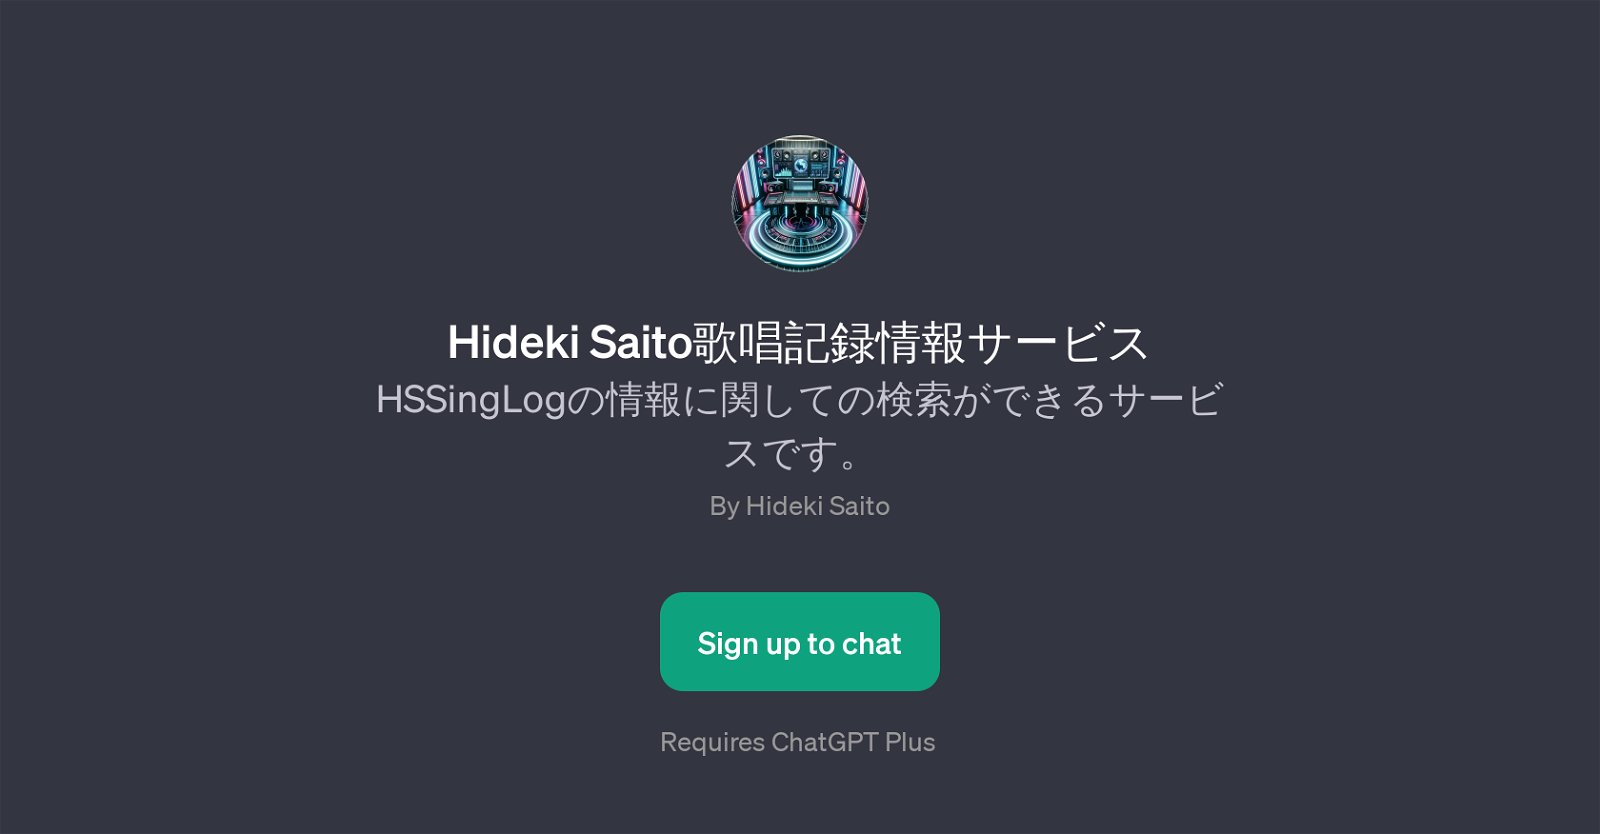 Hideki Saito website